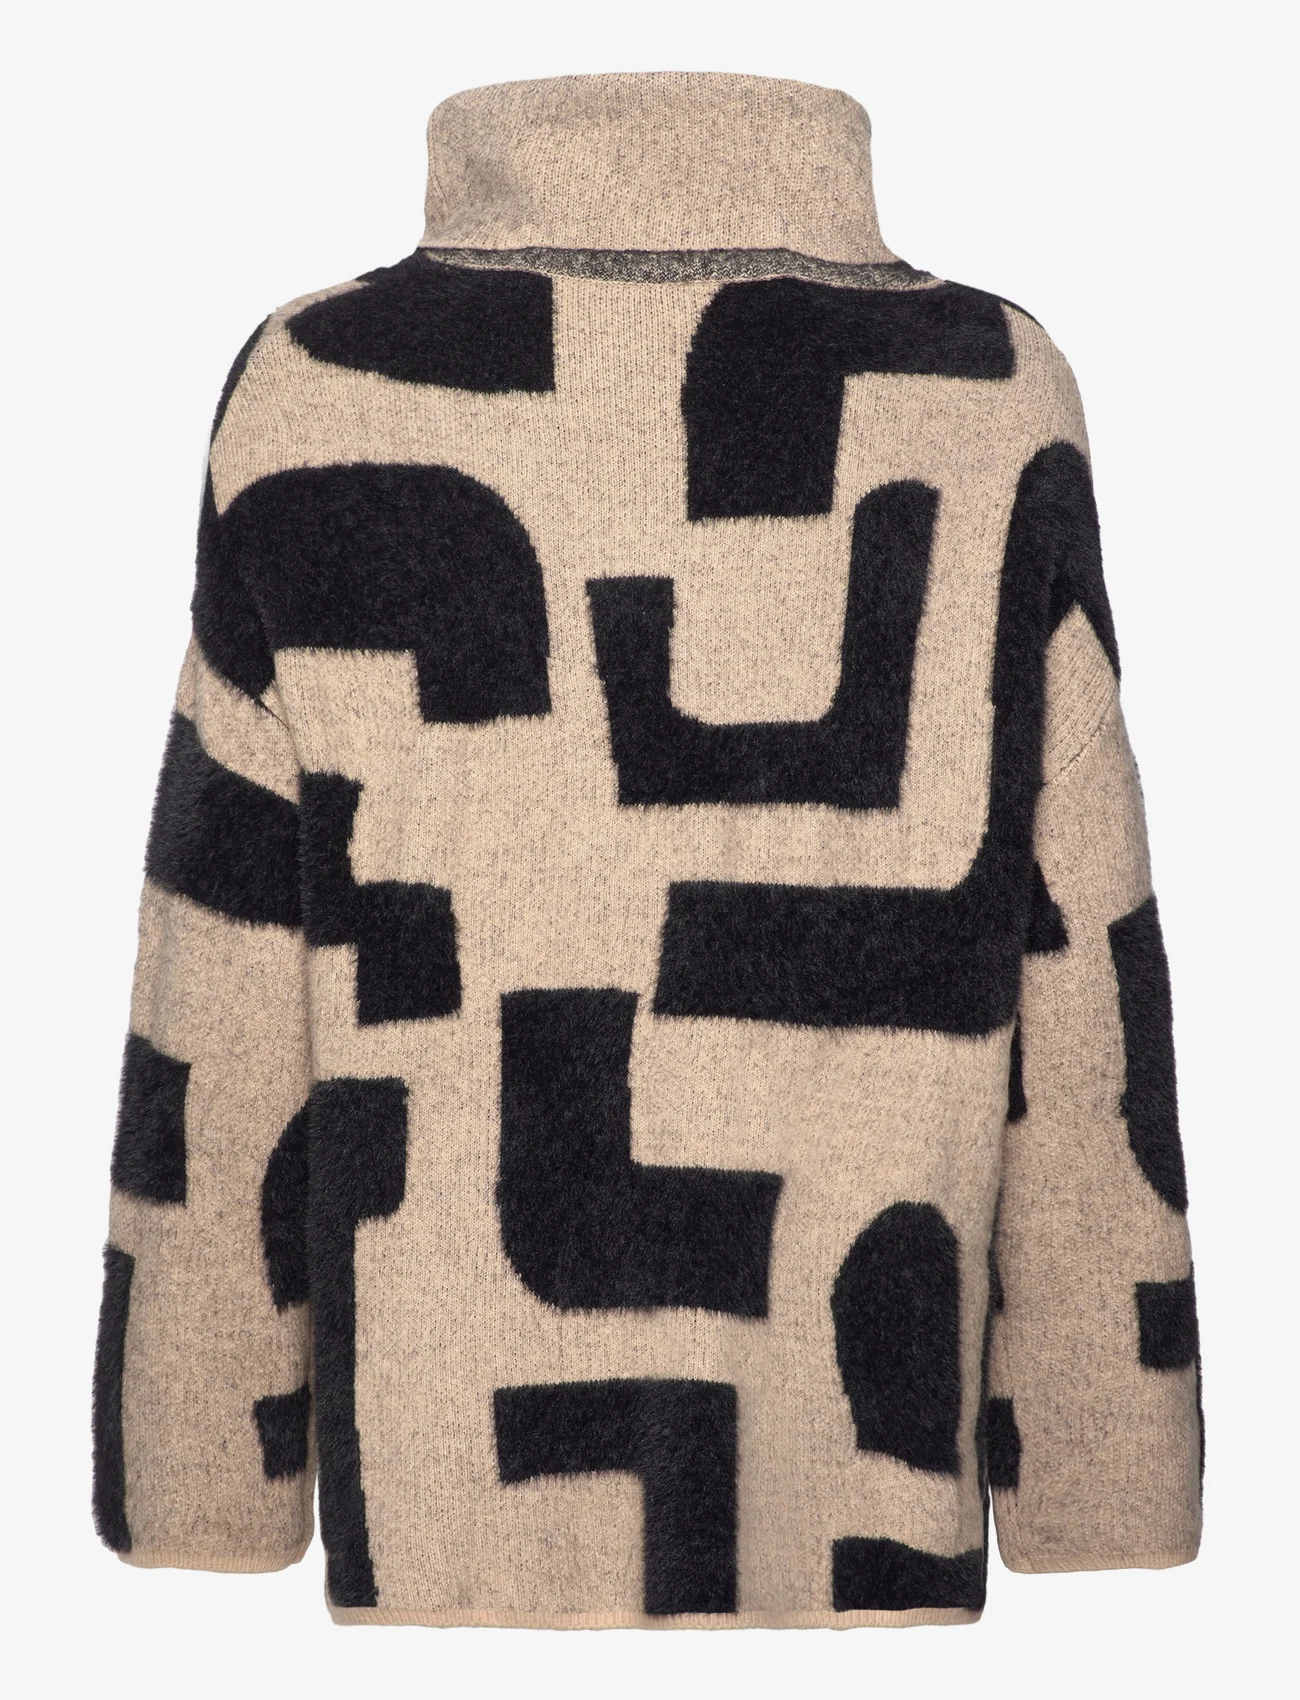 Tom Tailor - Knit intarsia pullover - coltruien - beige geometric knit pattern - 1